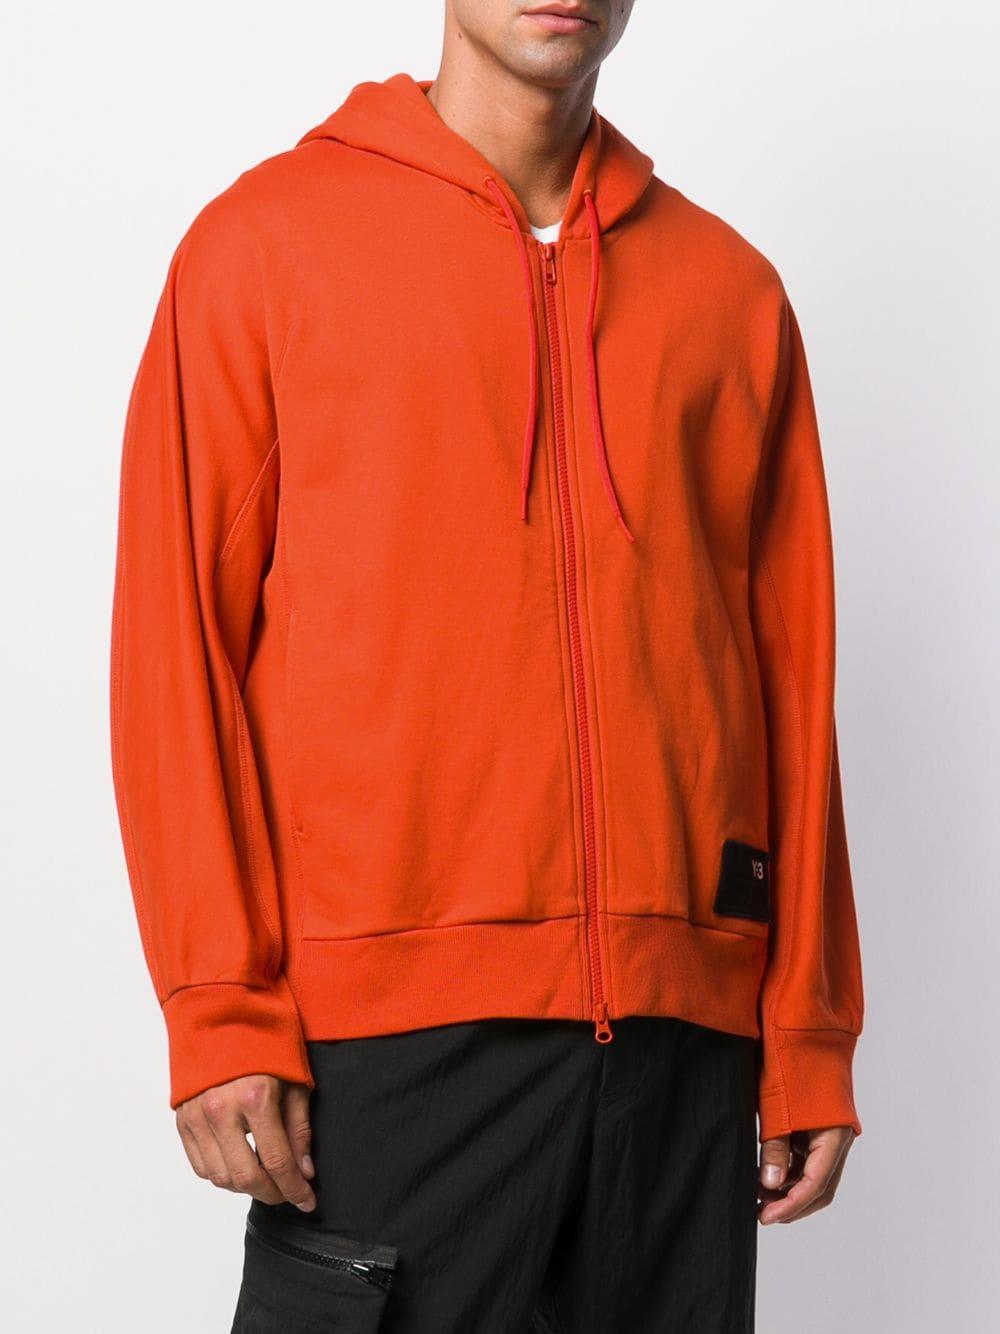 Y-3 Cotton Logo Patch Zip Hoodie in Orange for Men - Lyst